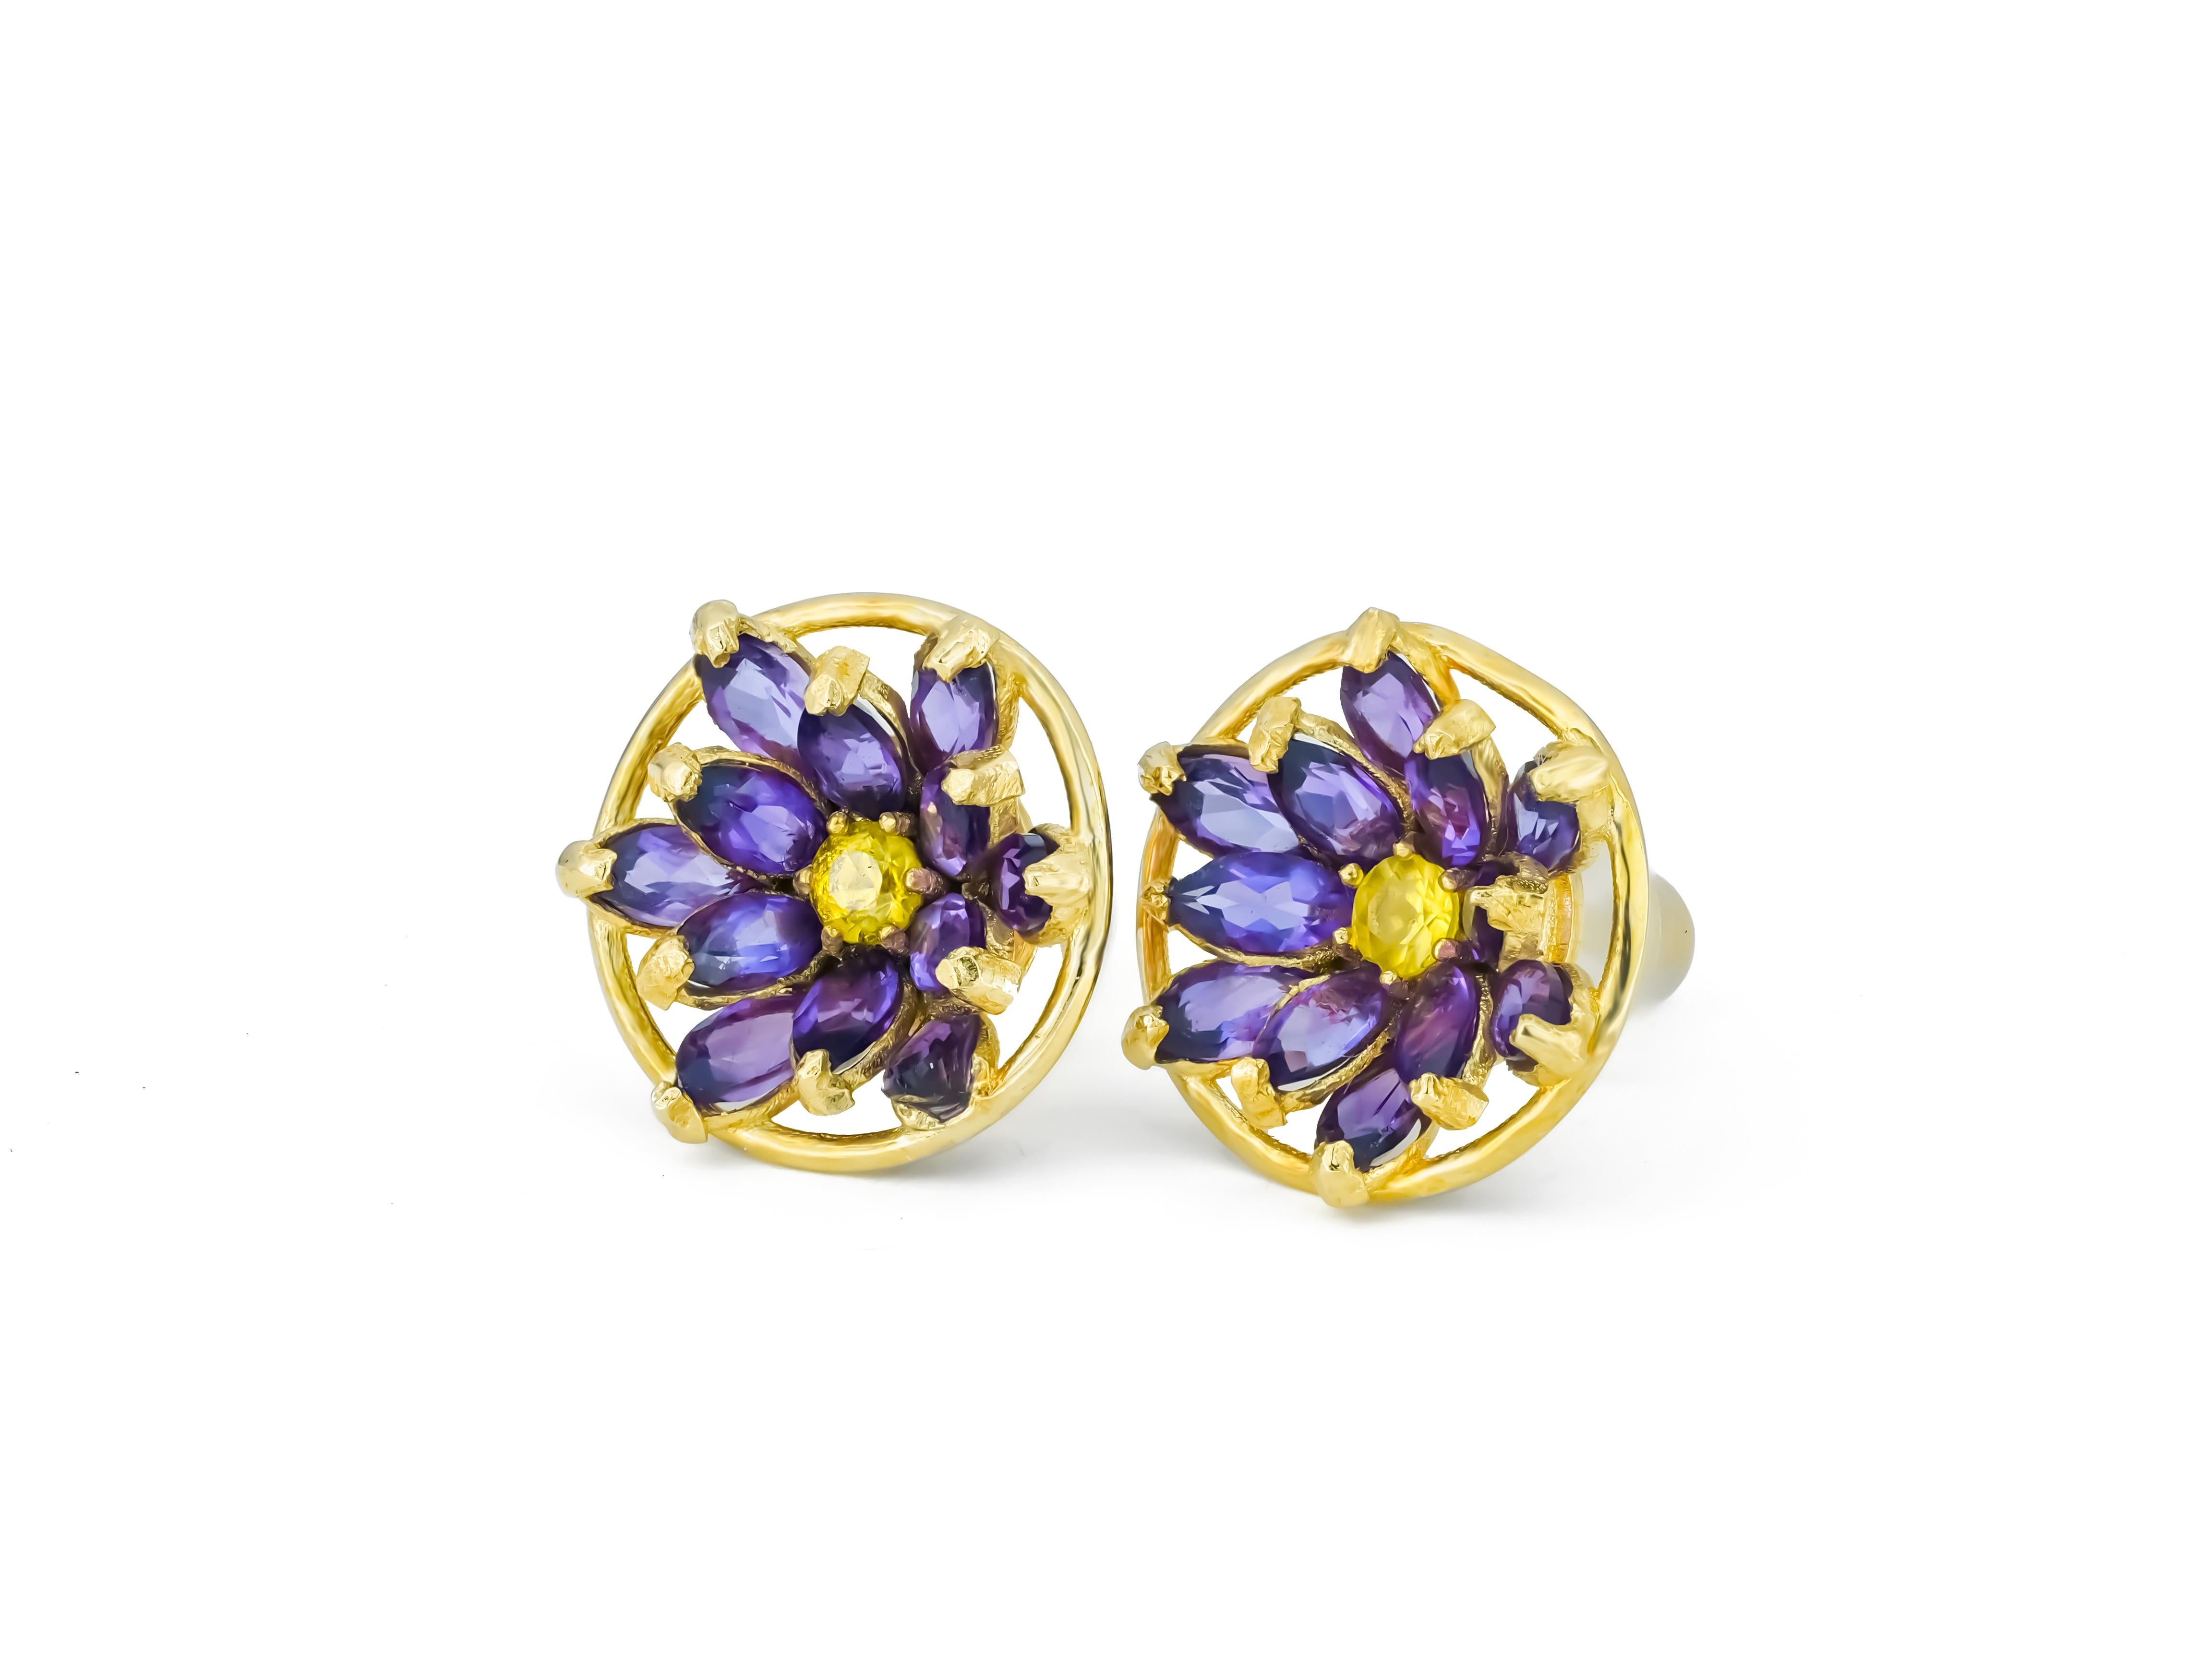 Lotus Flower Earrings Studs in 14K Gold, Amethyst and Sapphires Earrings! For Sale 5